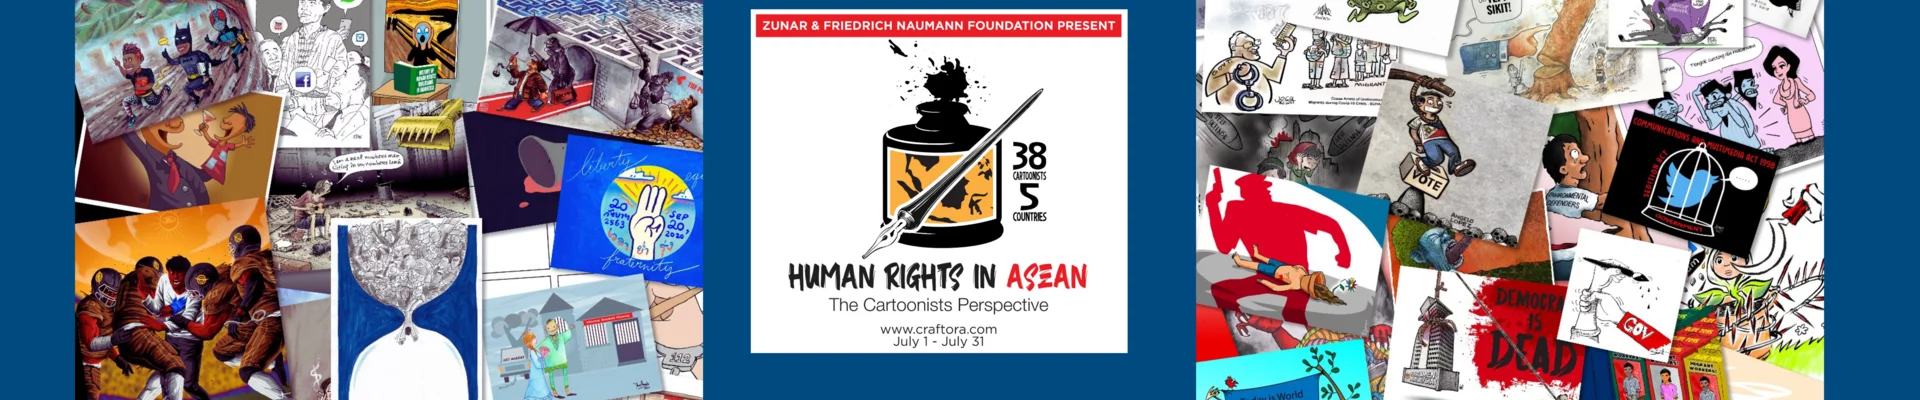 Human Rights, Cartoons. 